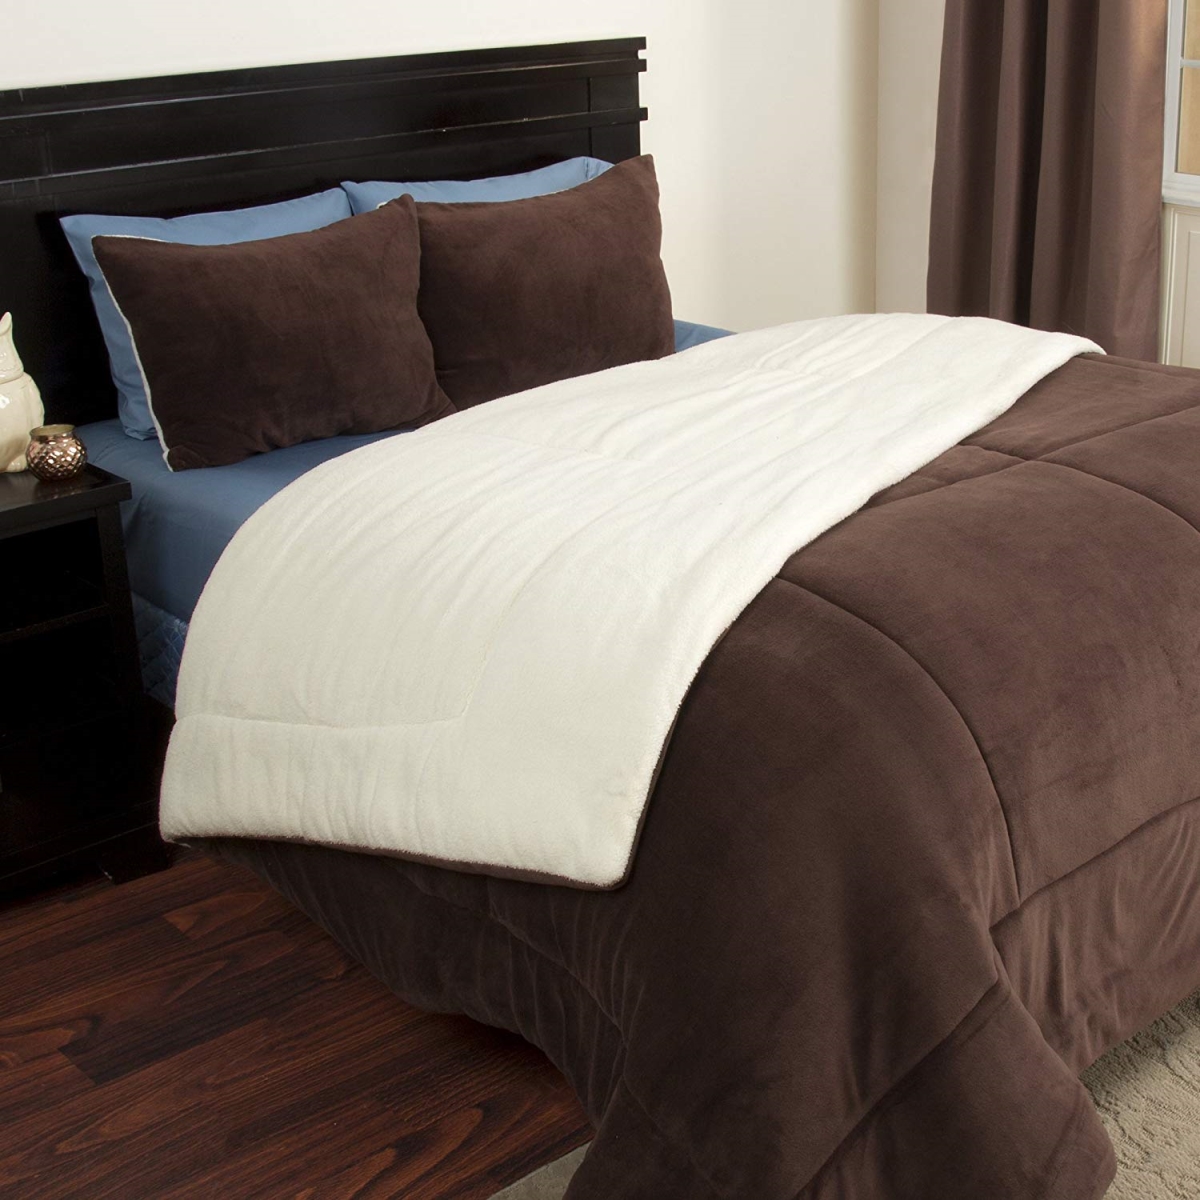 66a-27384 3 Piece Sherpa & Fleece Comforter Set, Full & Queen Size - Chocolate